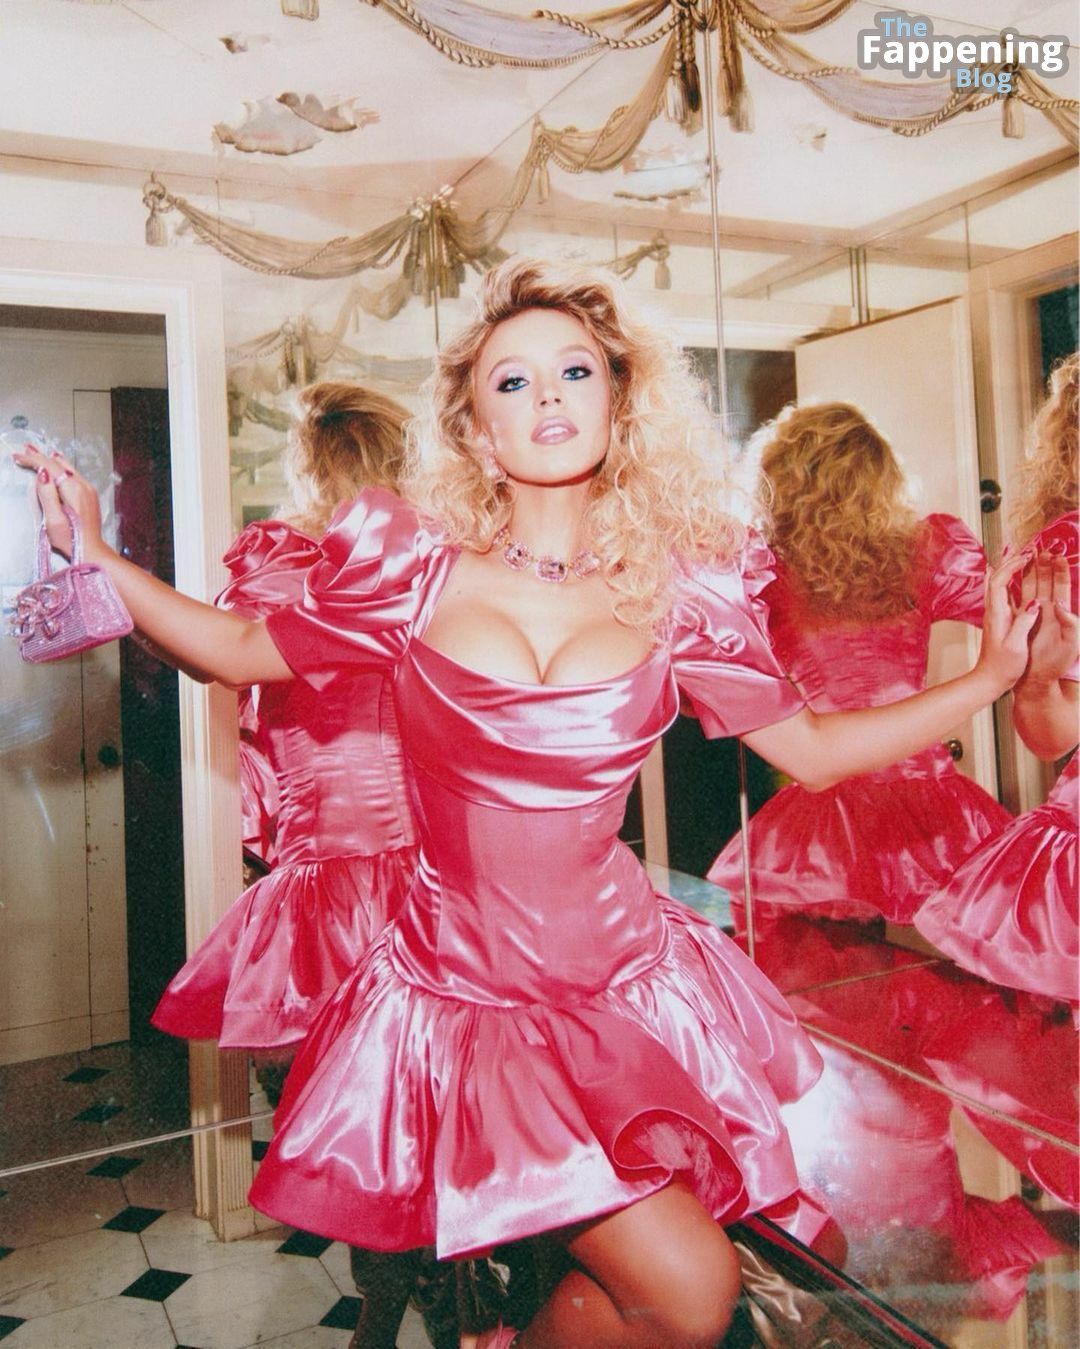 Sydney-Sweeney-Pink-Prom-Dress-Cleavage-3-thefappeningblog.com_.jpg